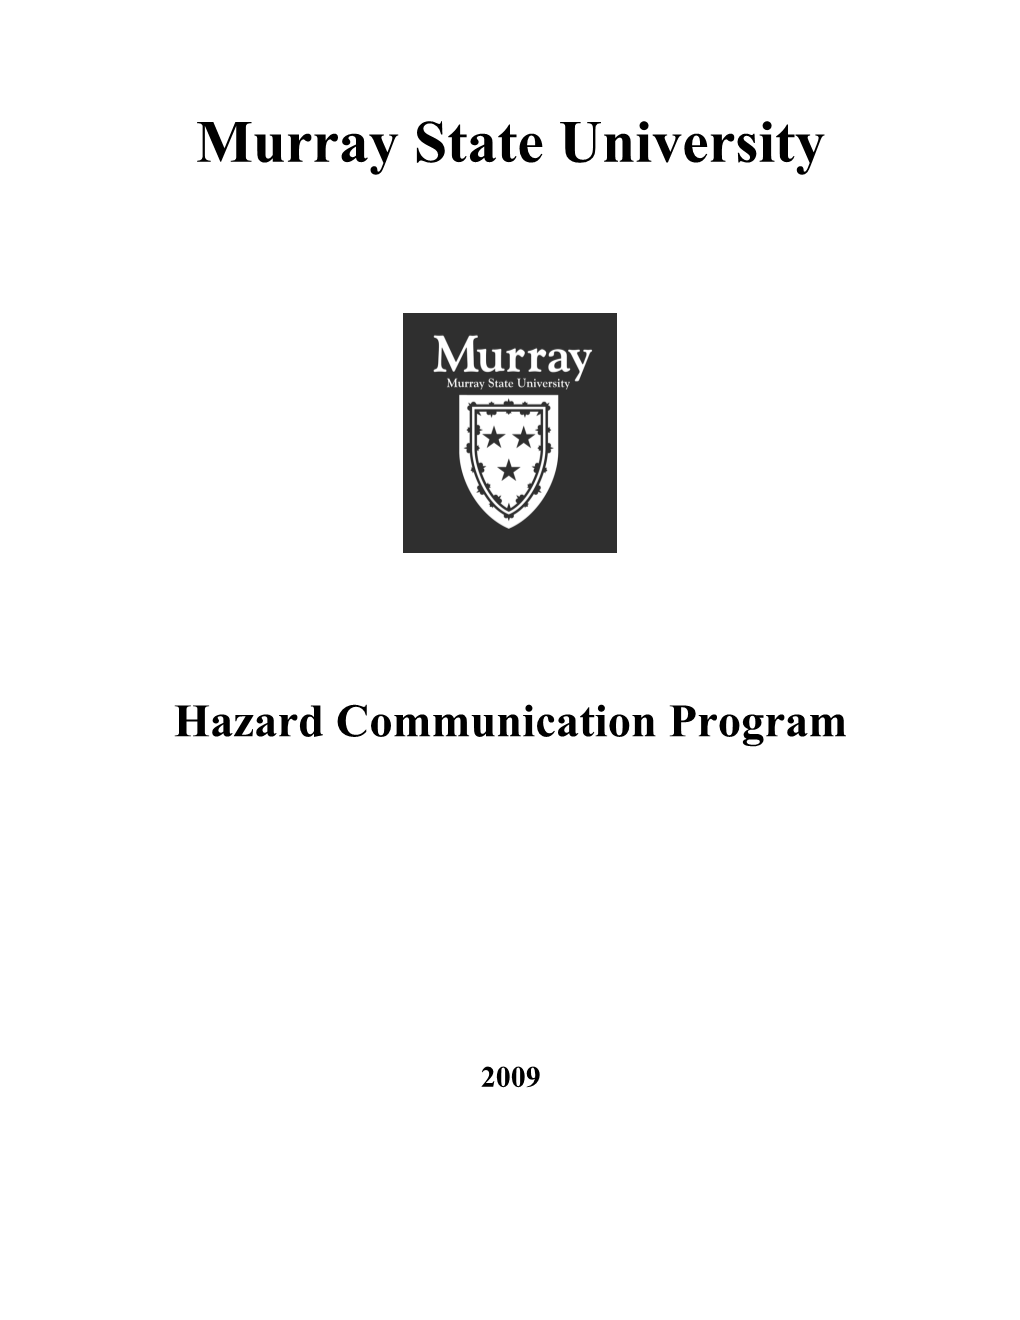 Hazard Communication Program s2